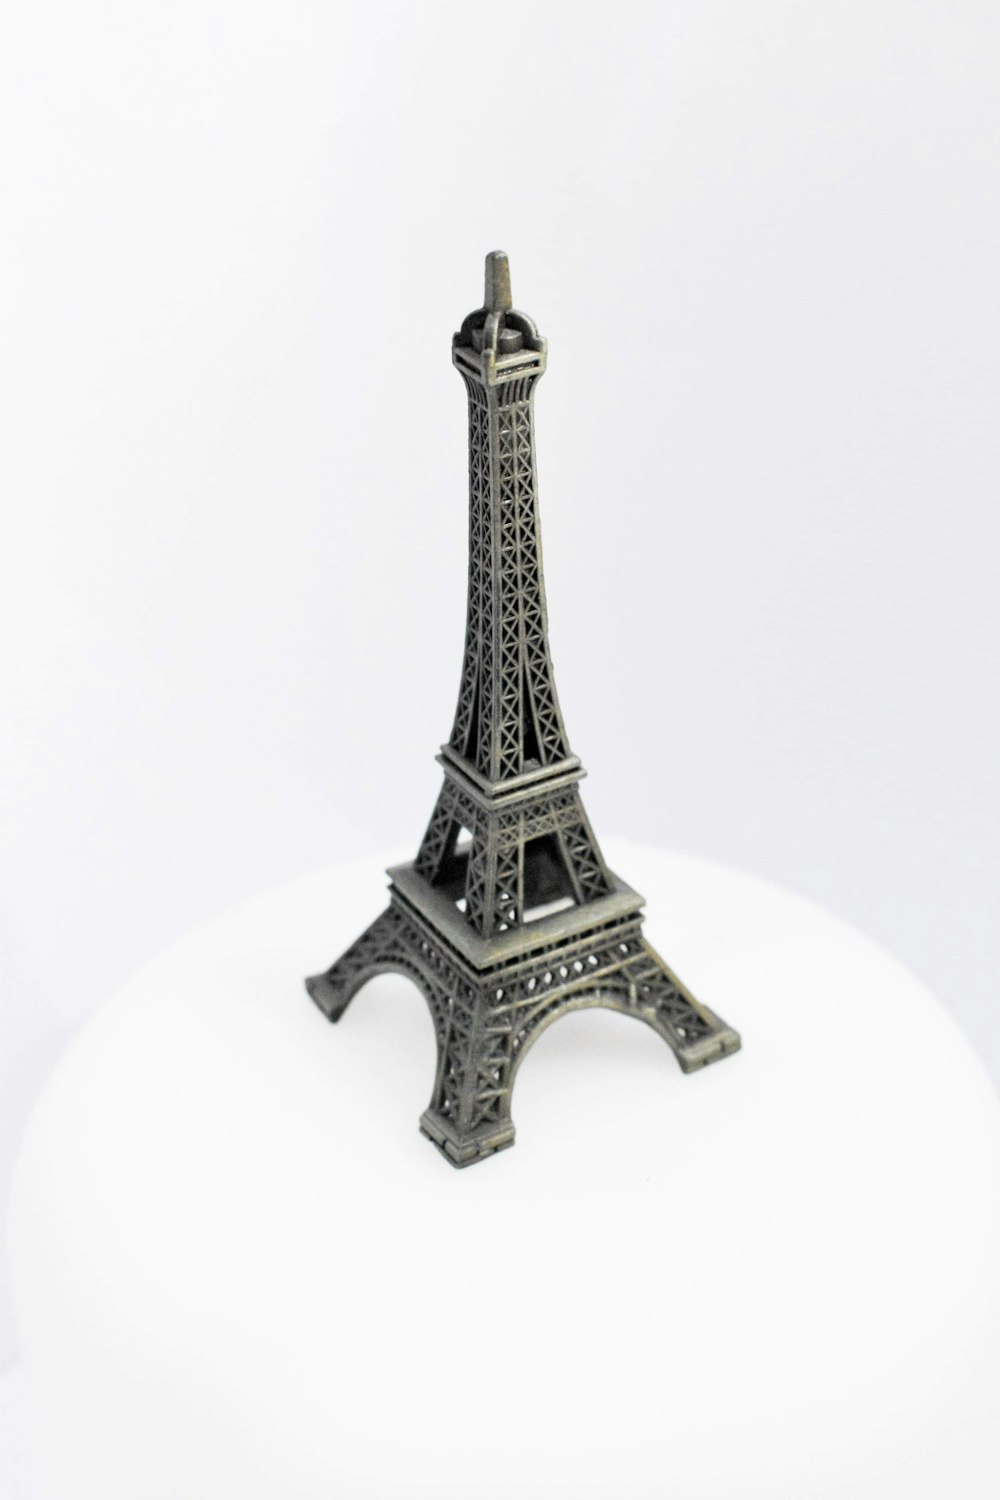 Maqueta de la Torre Eiffel